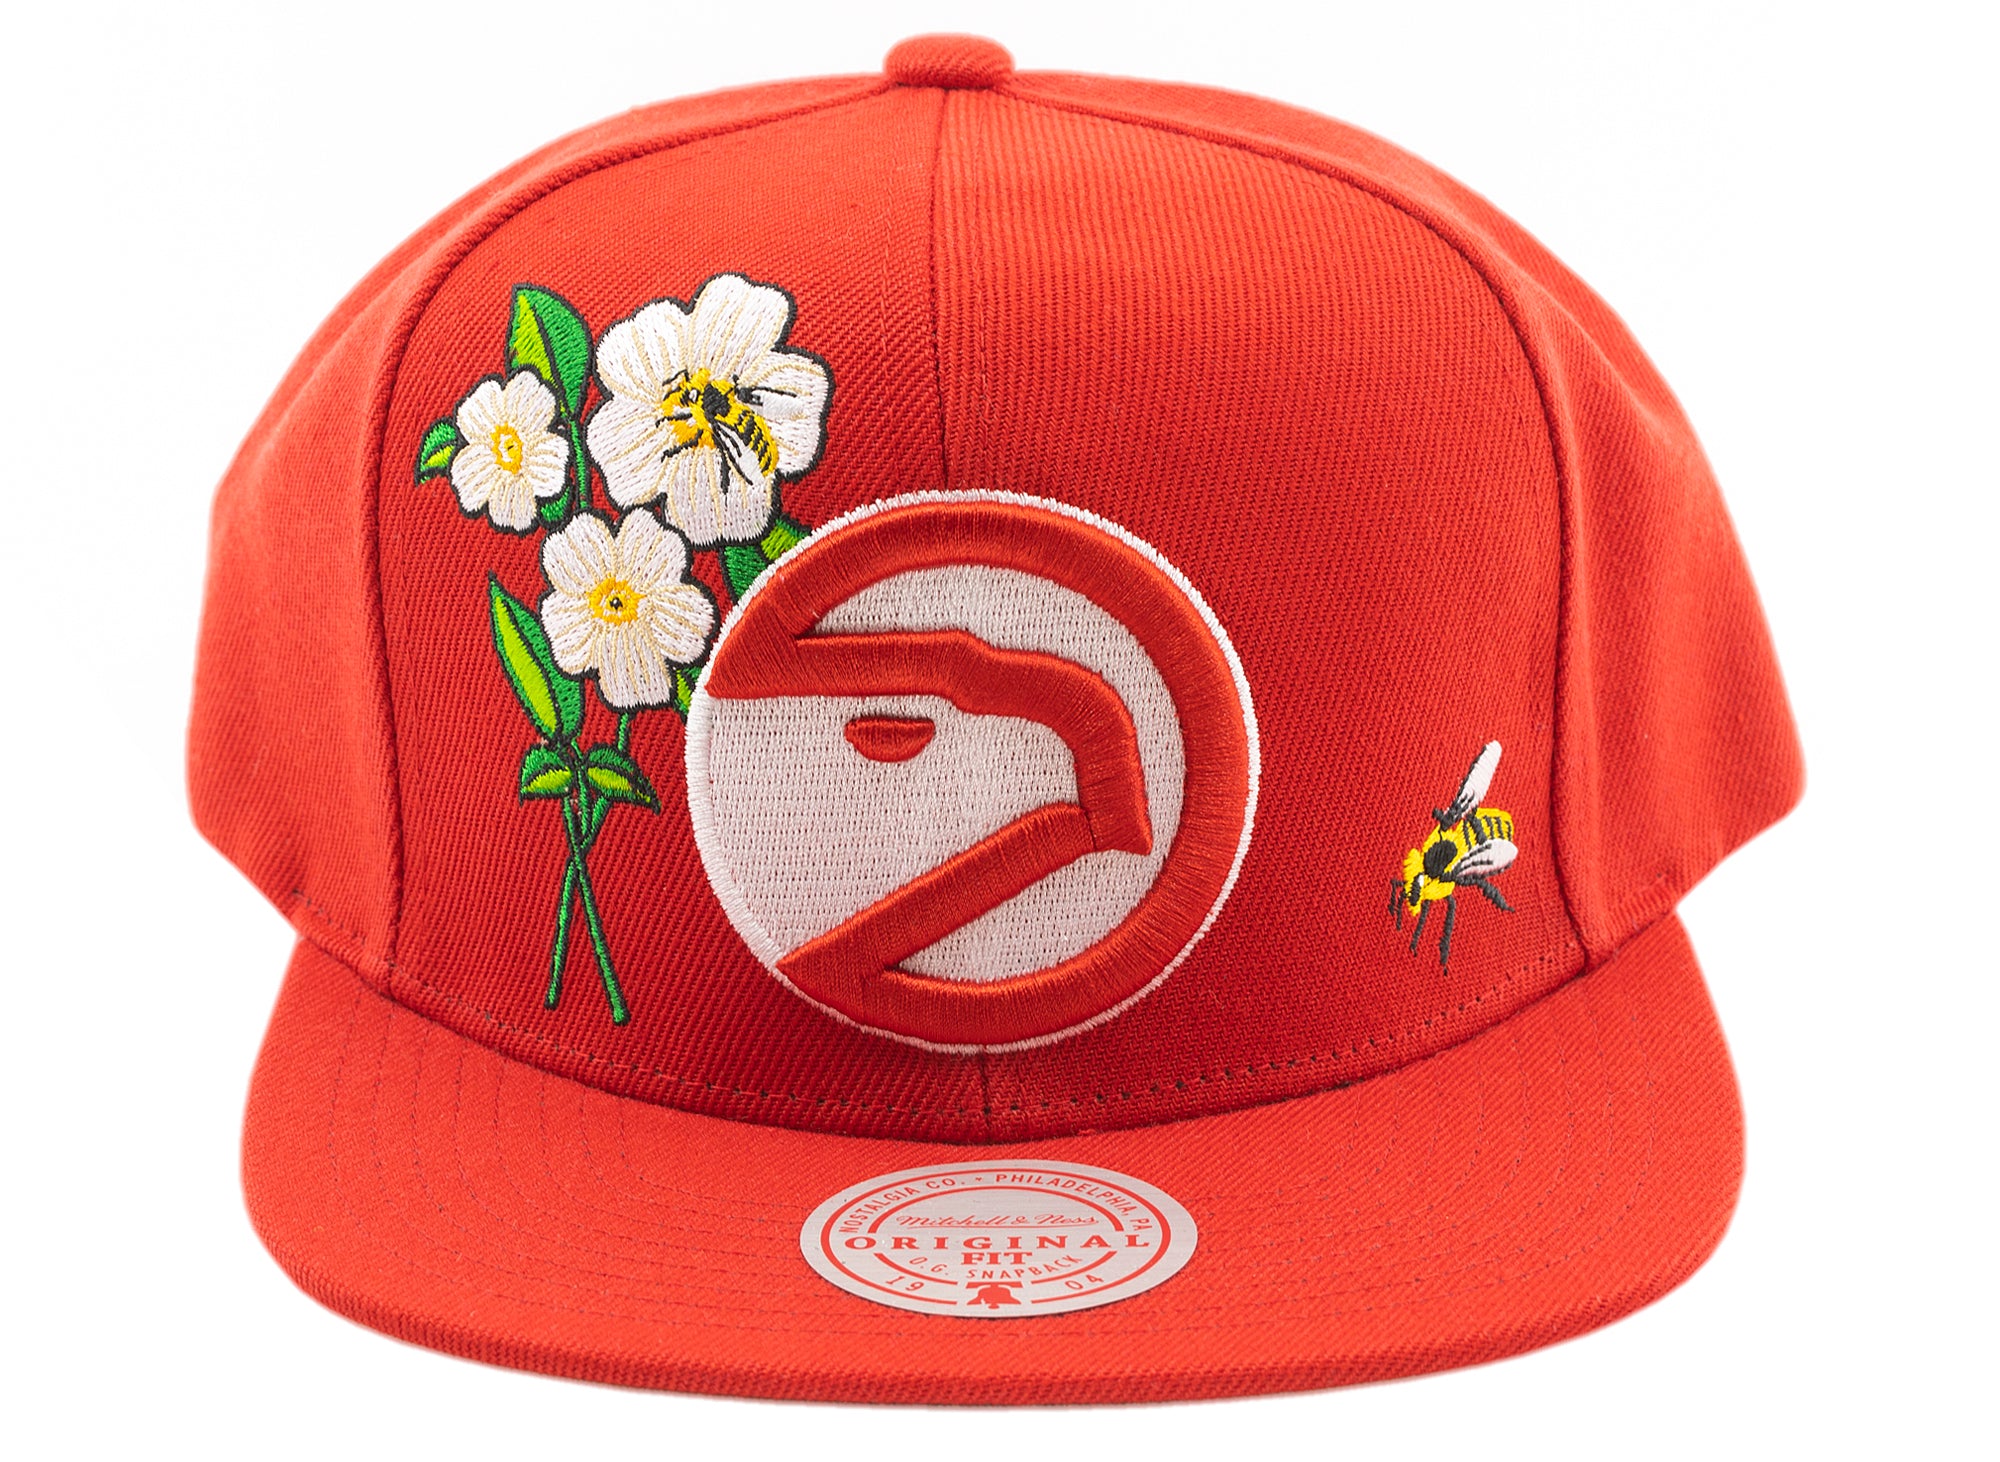 Atlanta Hawks Mitchell & Ness NBA SnapBack Hat